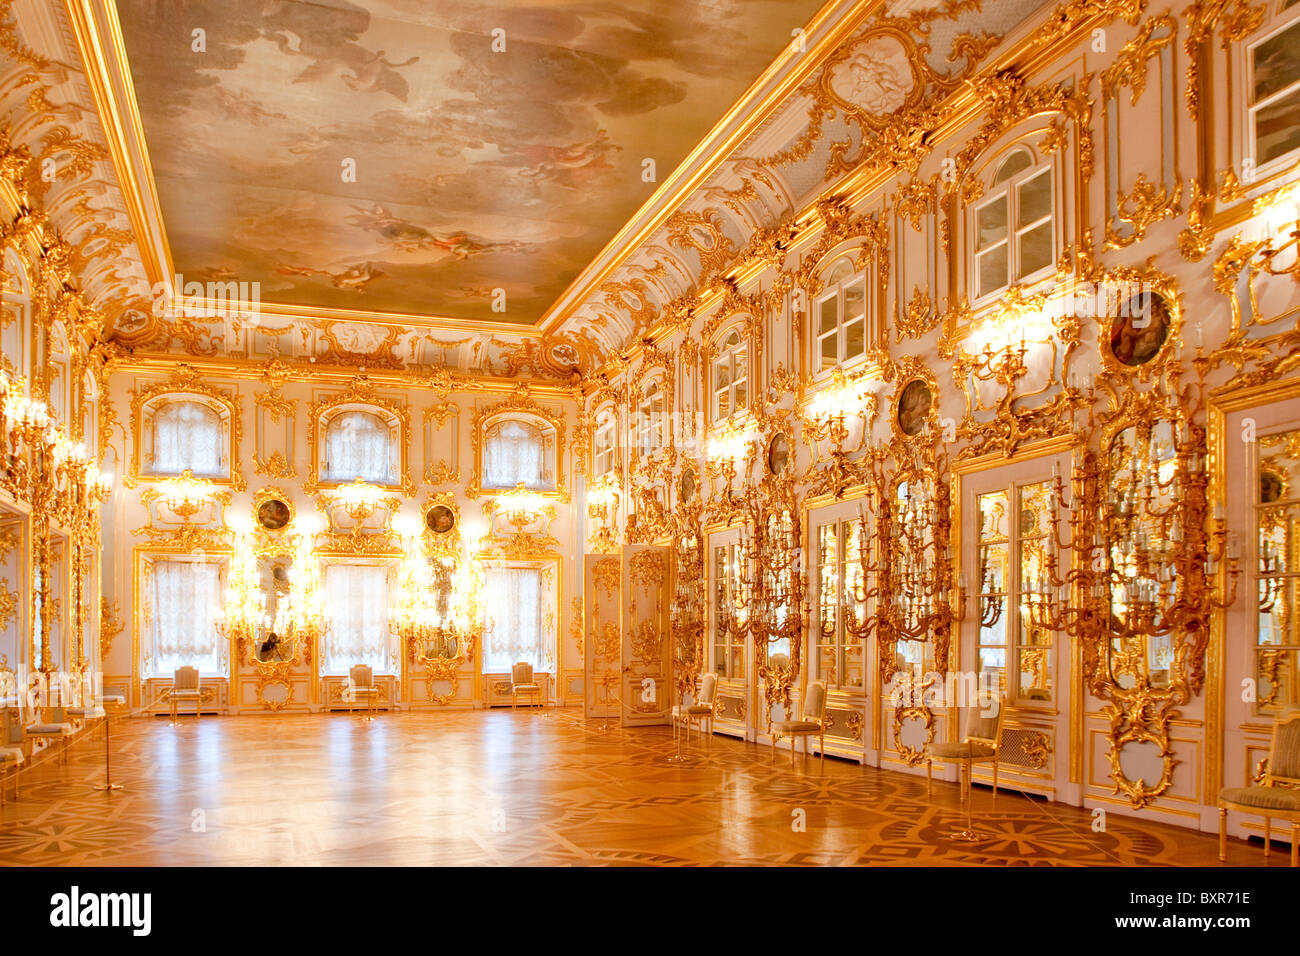 File:Grand Peterhof Palace-main staircase.jpg - Wikimedia Commons